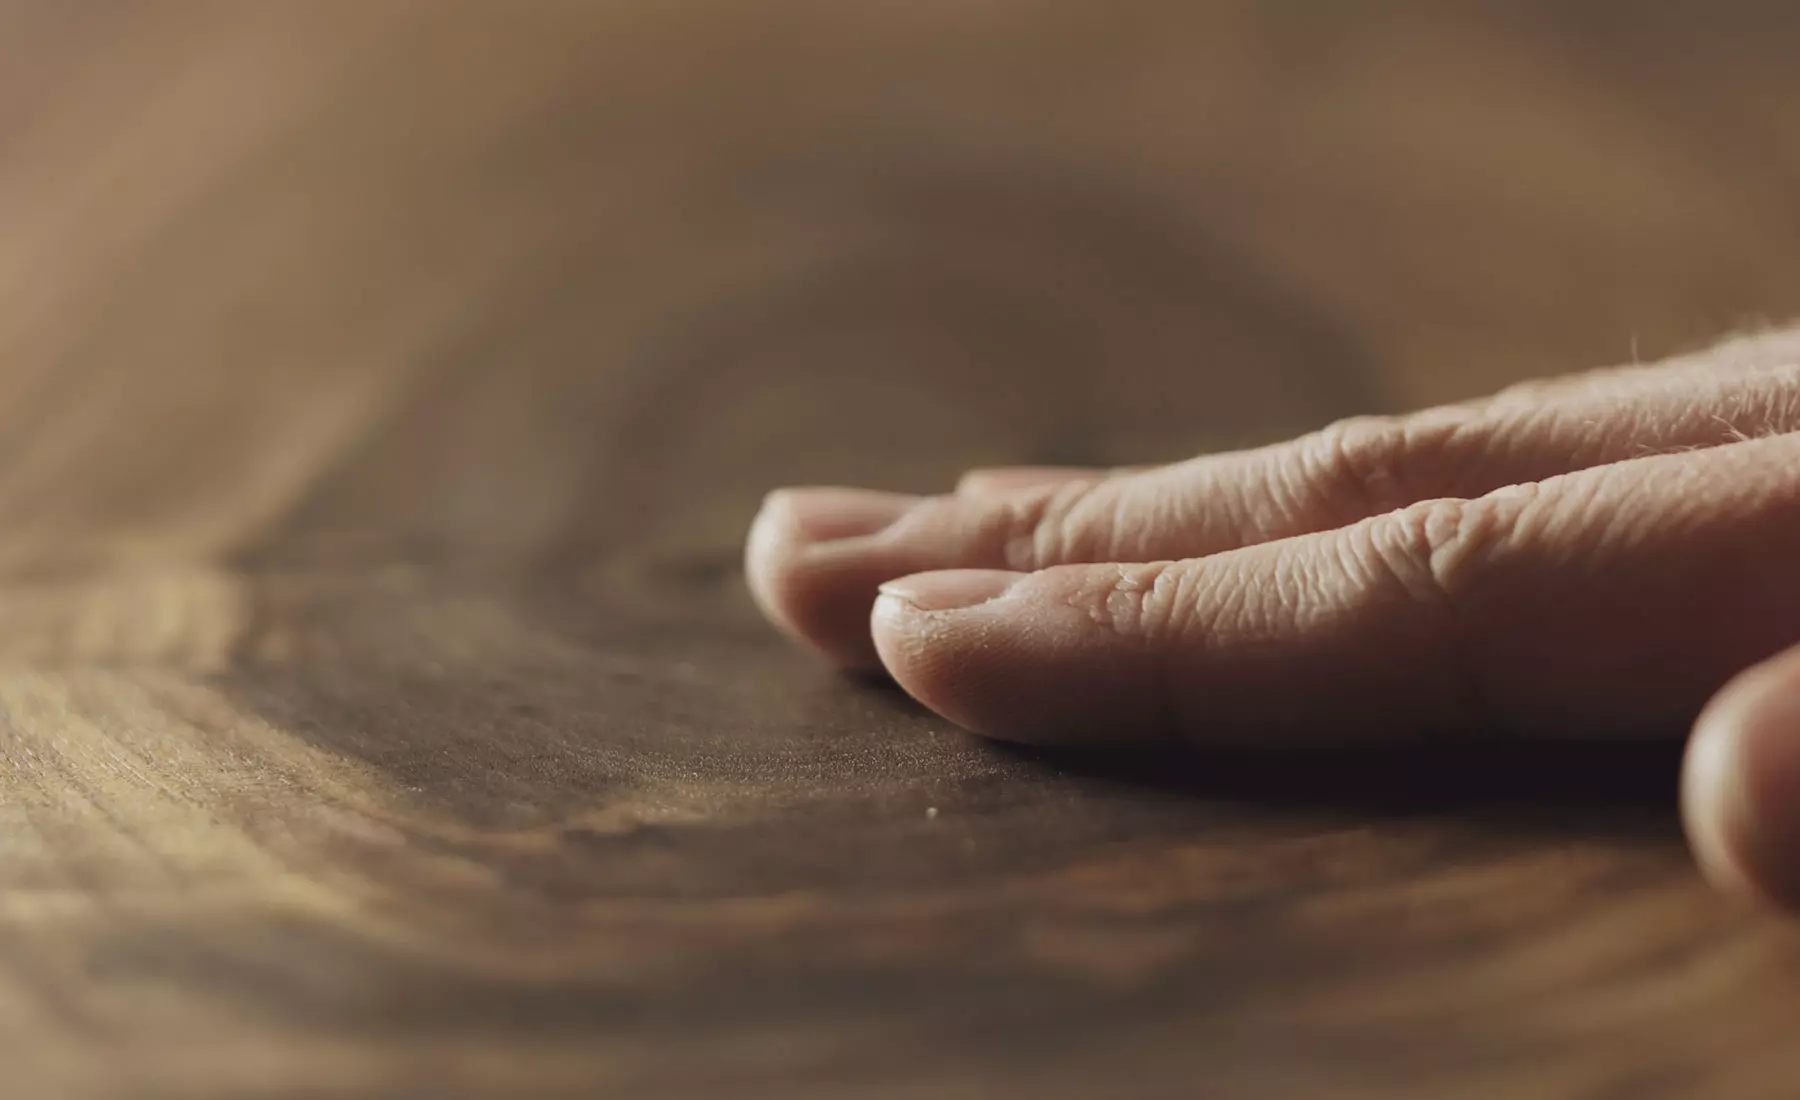 A hand caresses a hardwood board